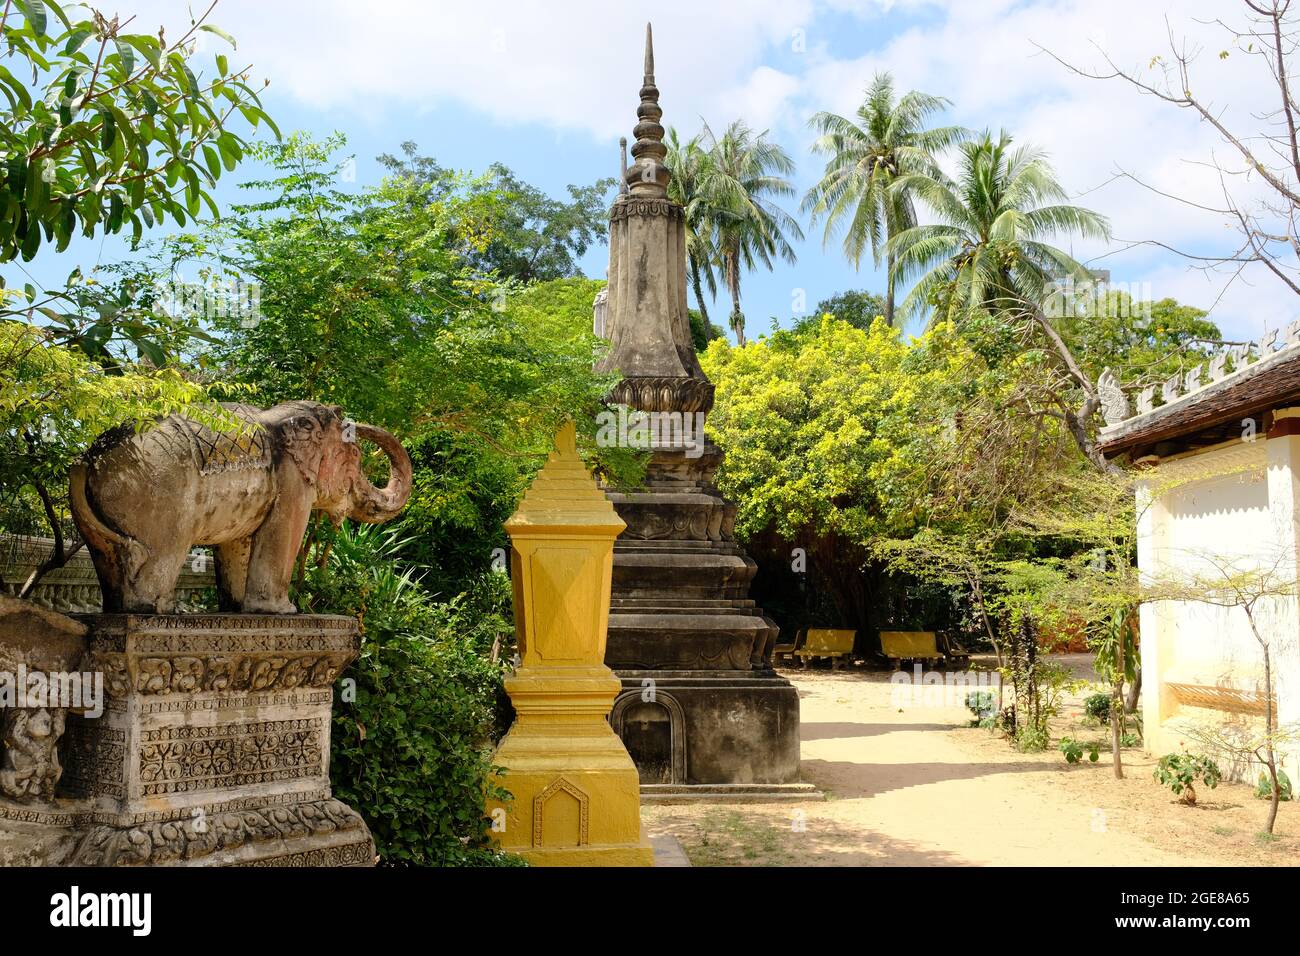 Cambodge Krong Siem Reap - Wat Bo jardin avec statue d'éléphant Banque D'Images